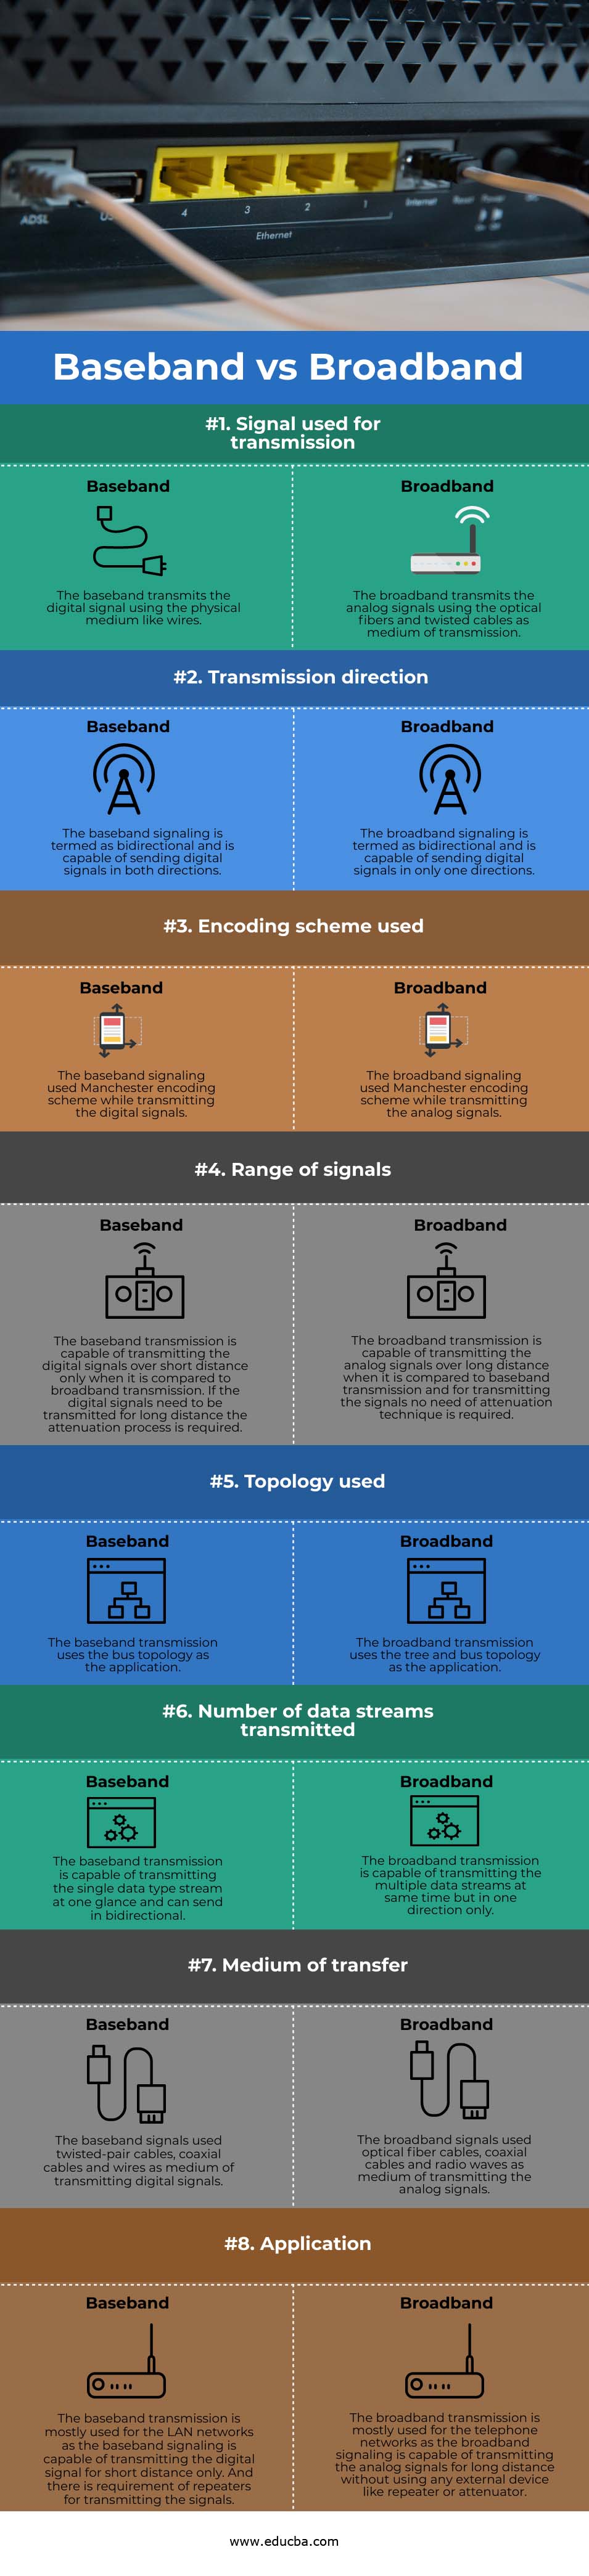 Baseband vs Broadband info